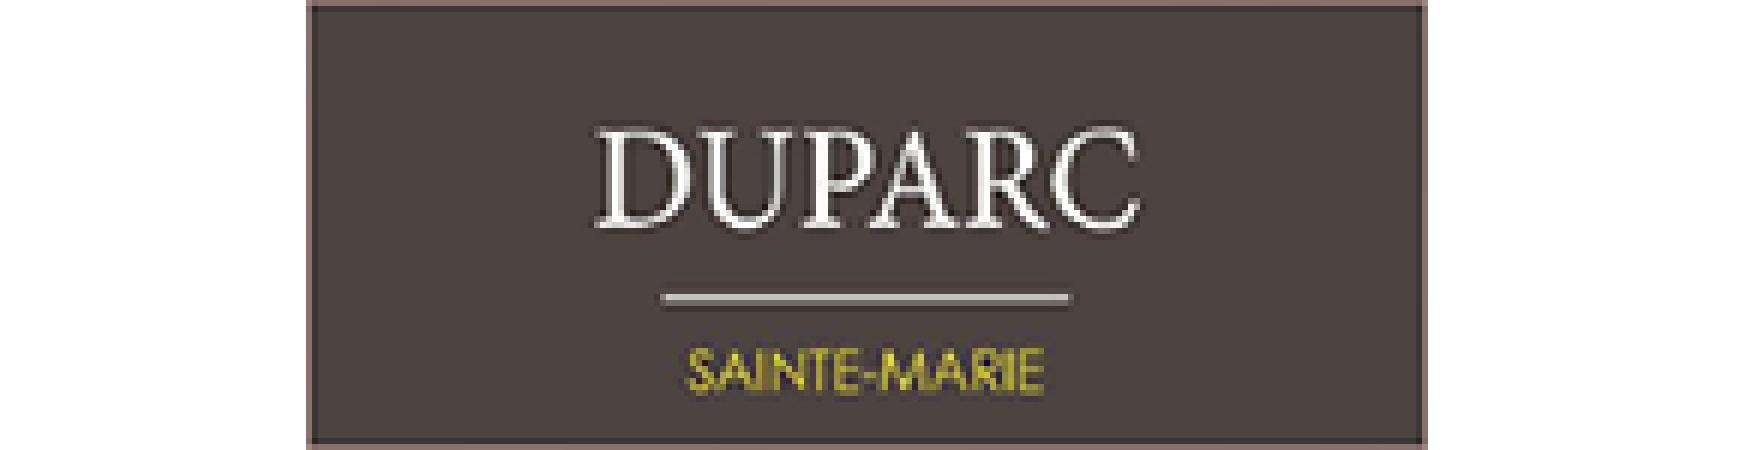 Duparc Sainte-marie Sainte Marie